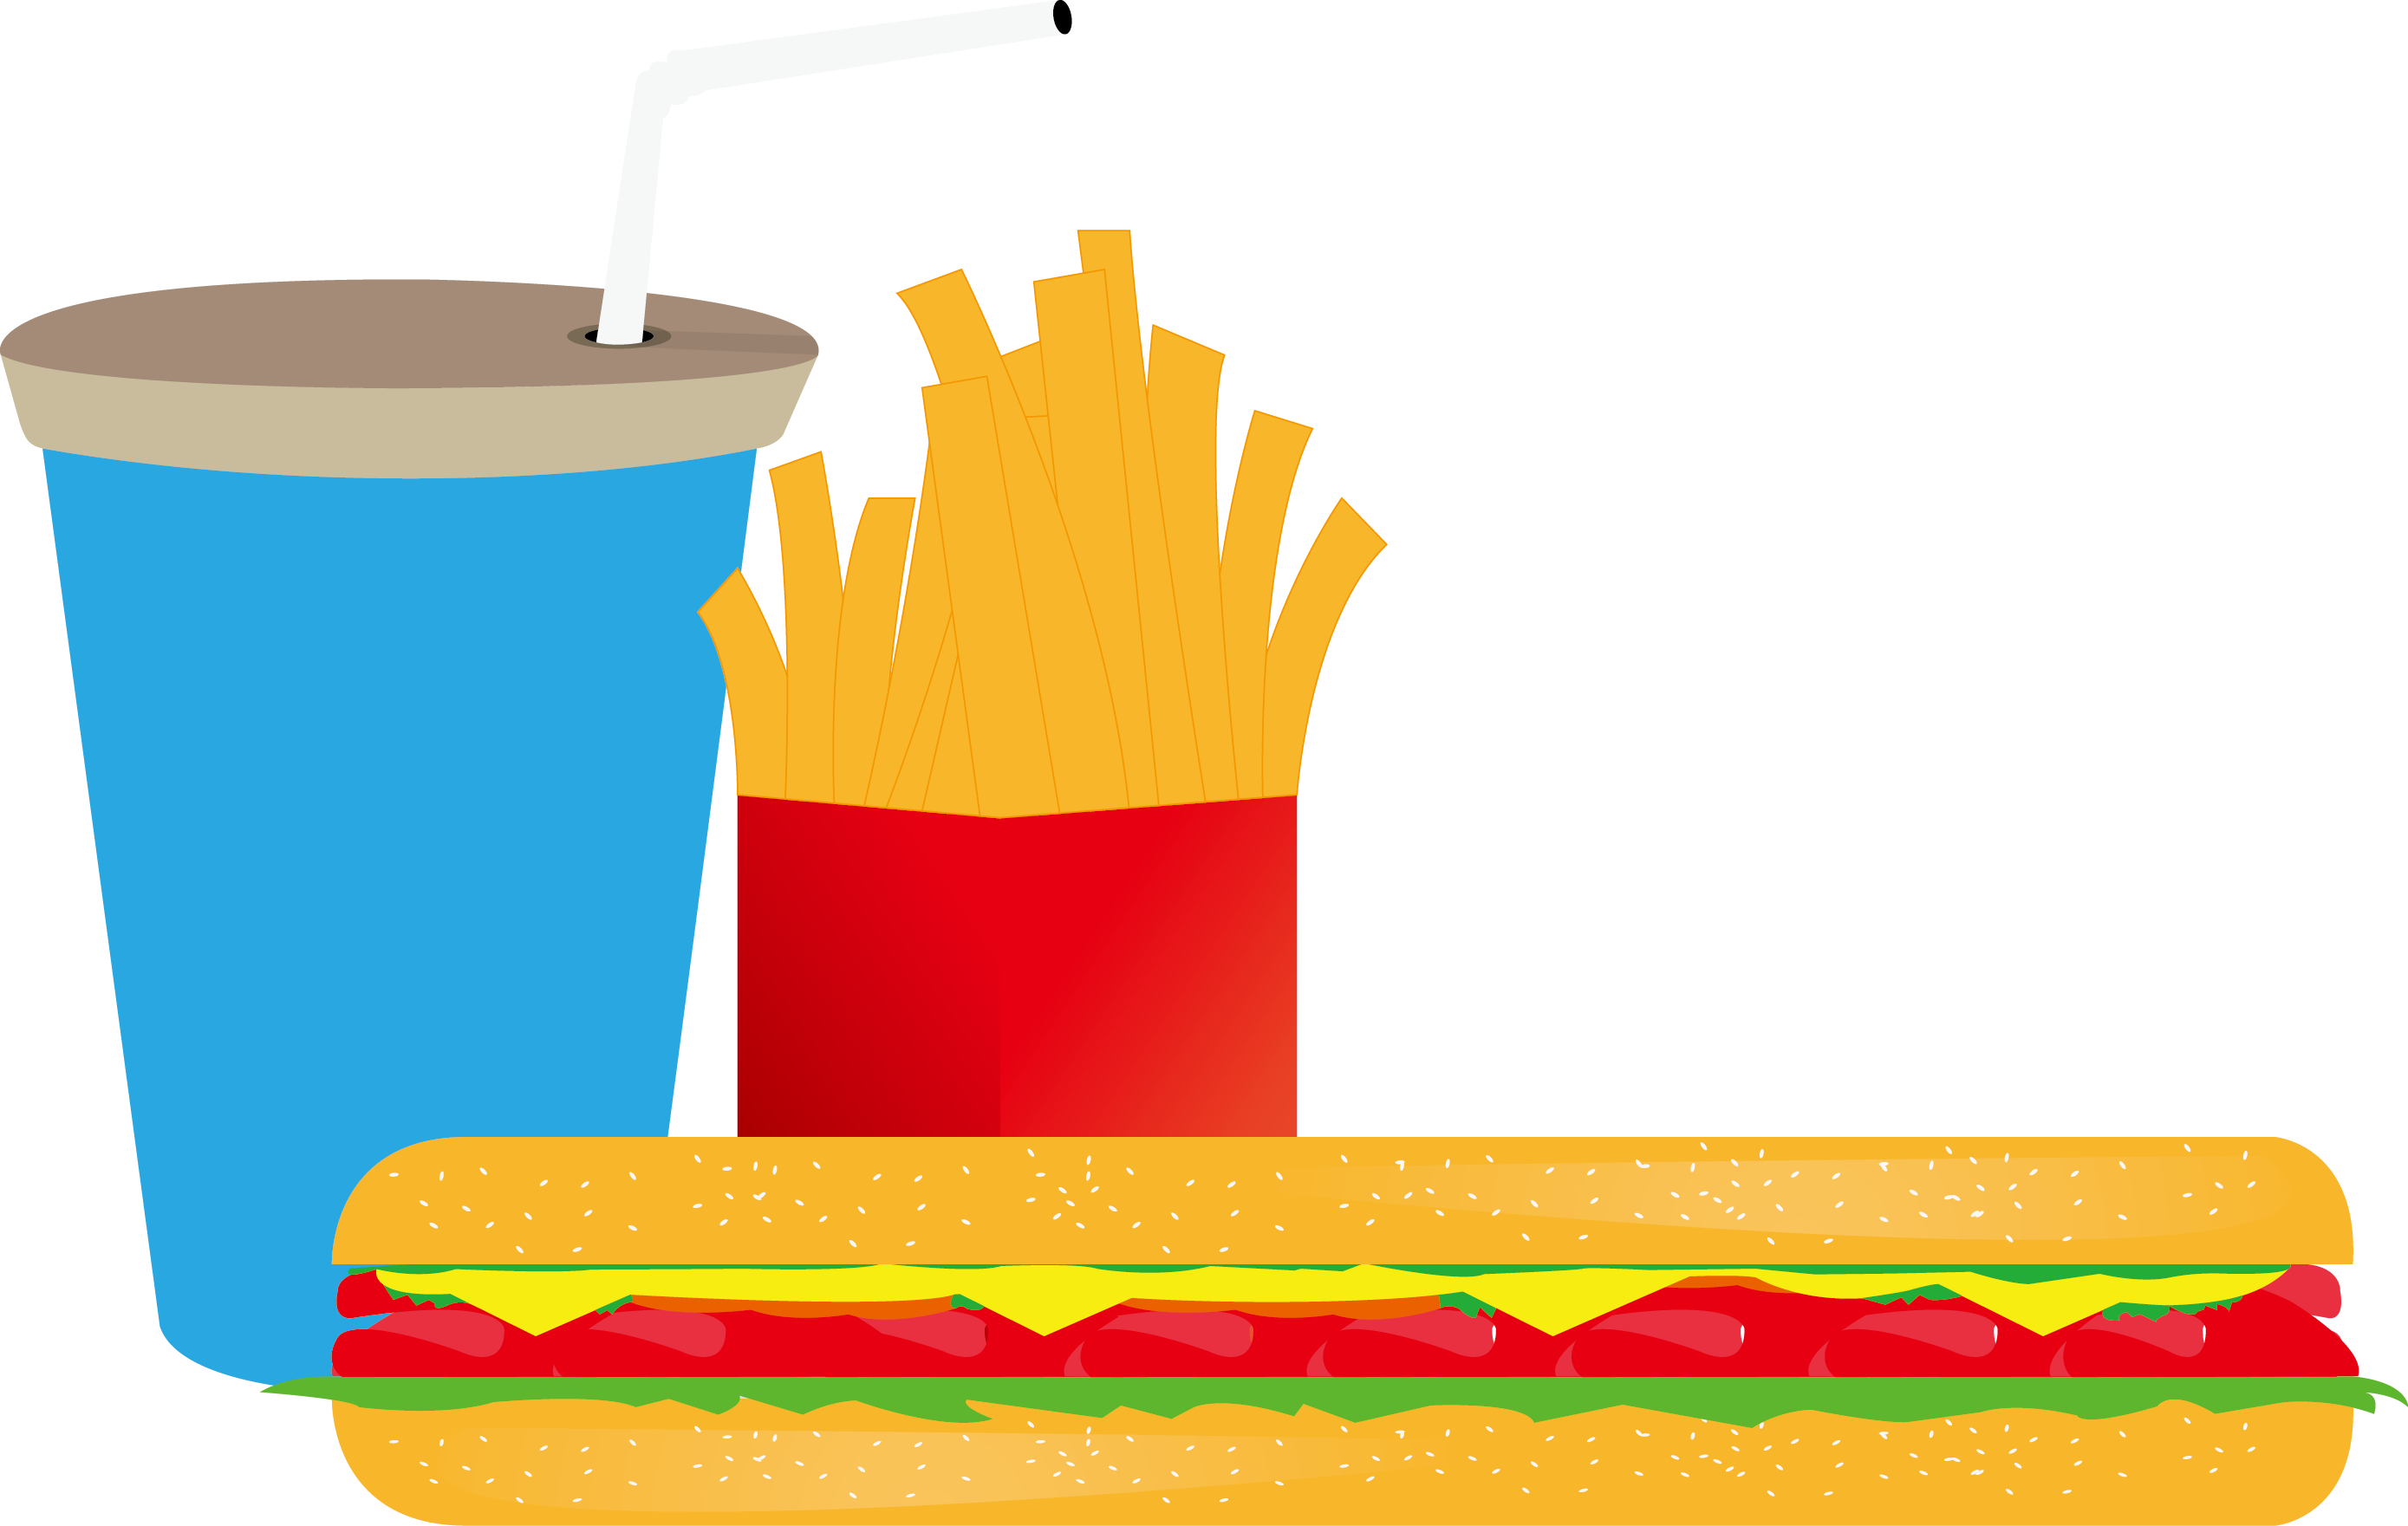 Hot Dog Coca-cola French Fries - Hot Dog (2778x1761)